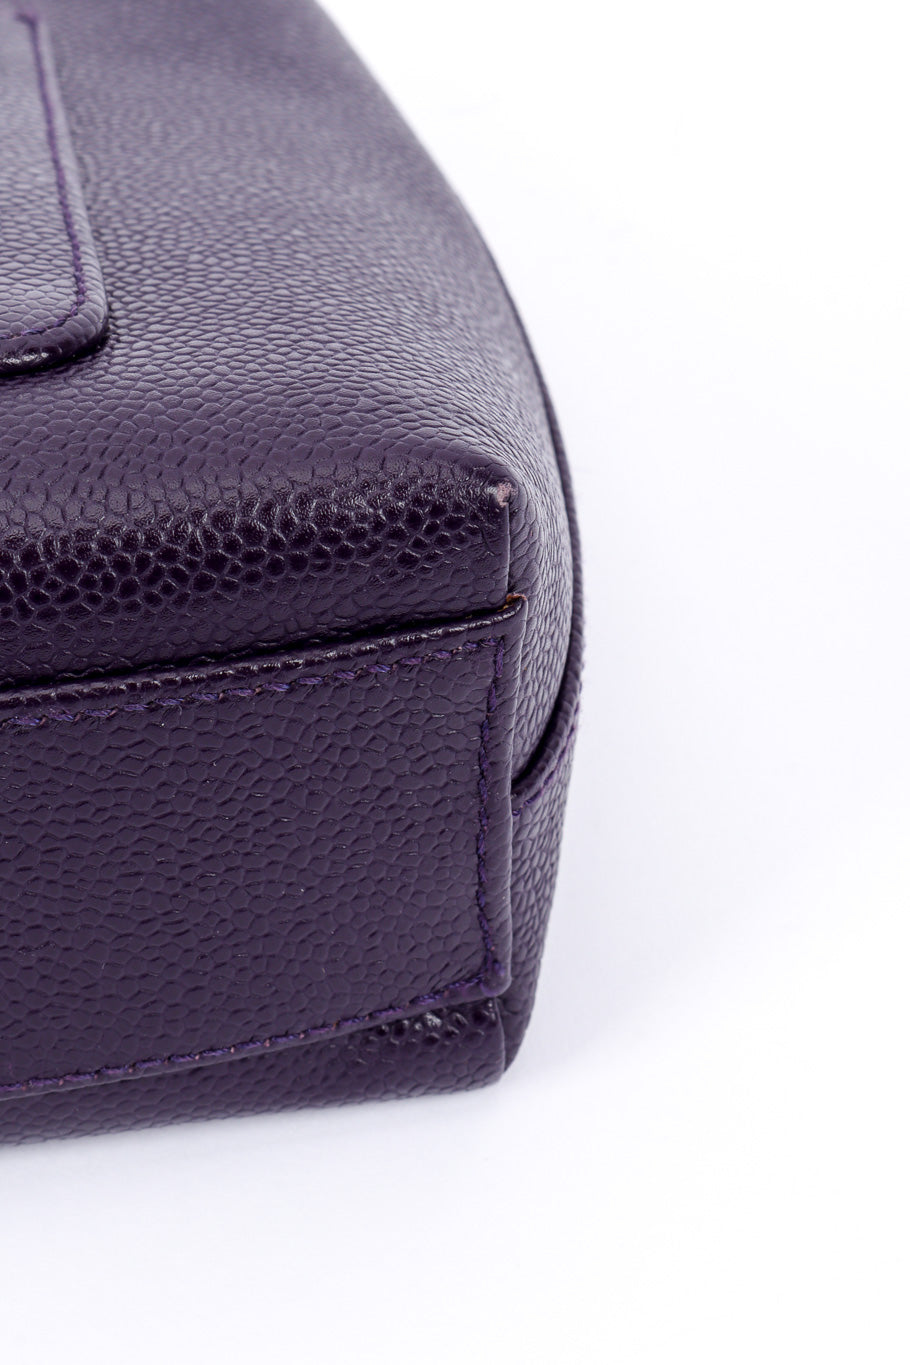 Chanel Bijoux Chain Shoulder Bag bottom closeup @recessla